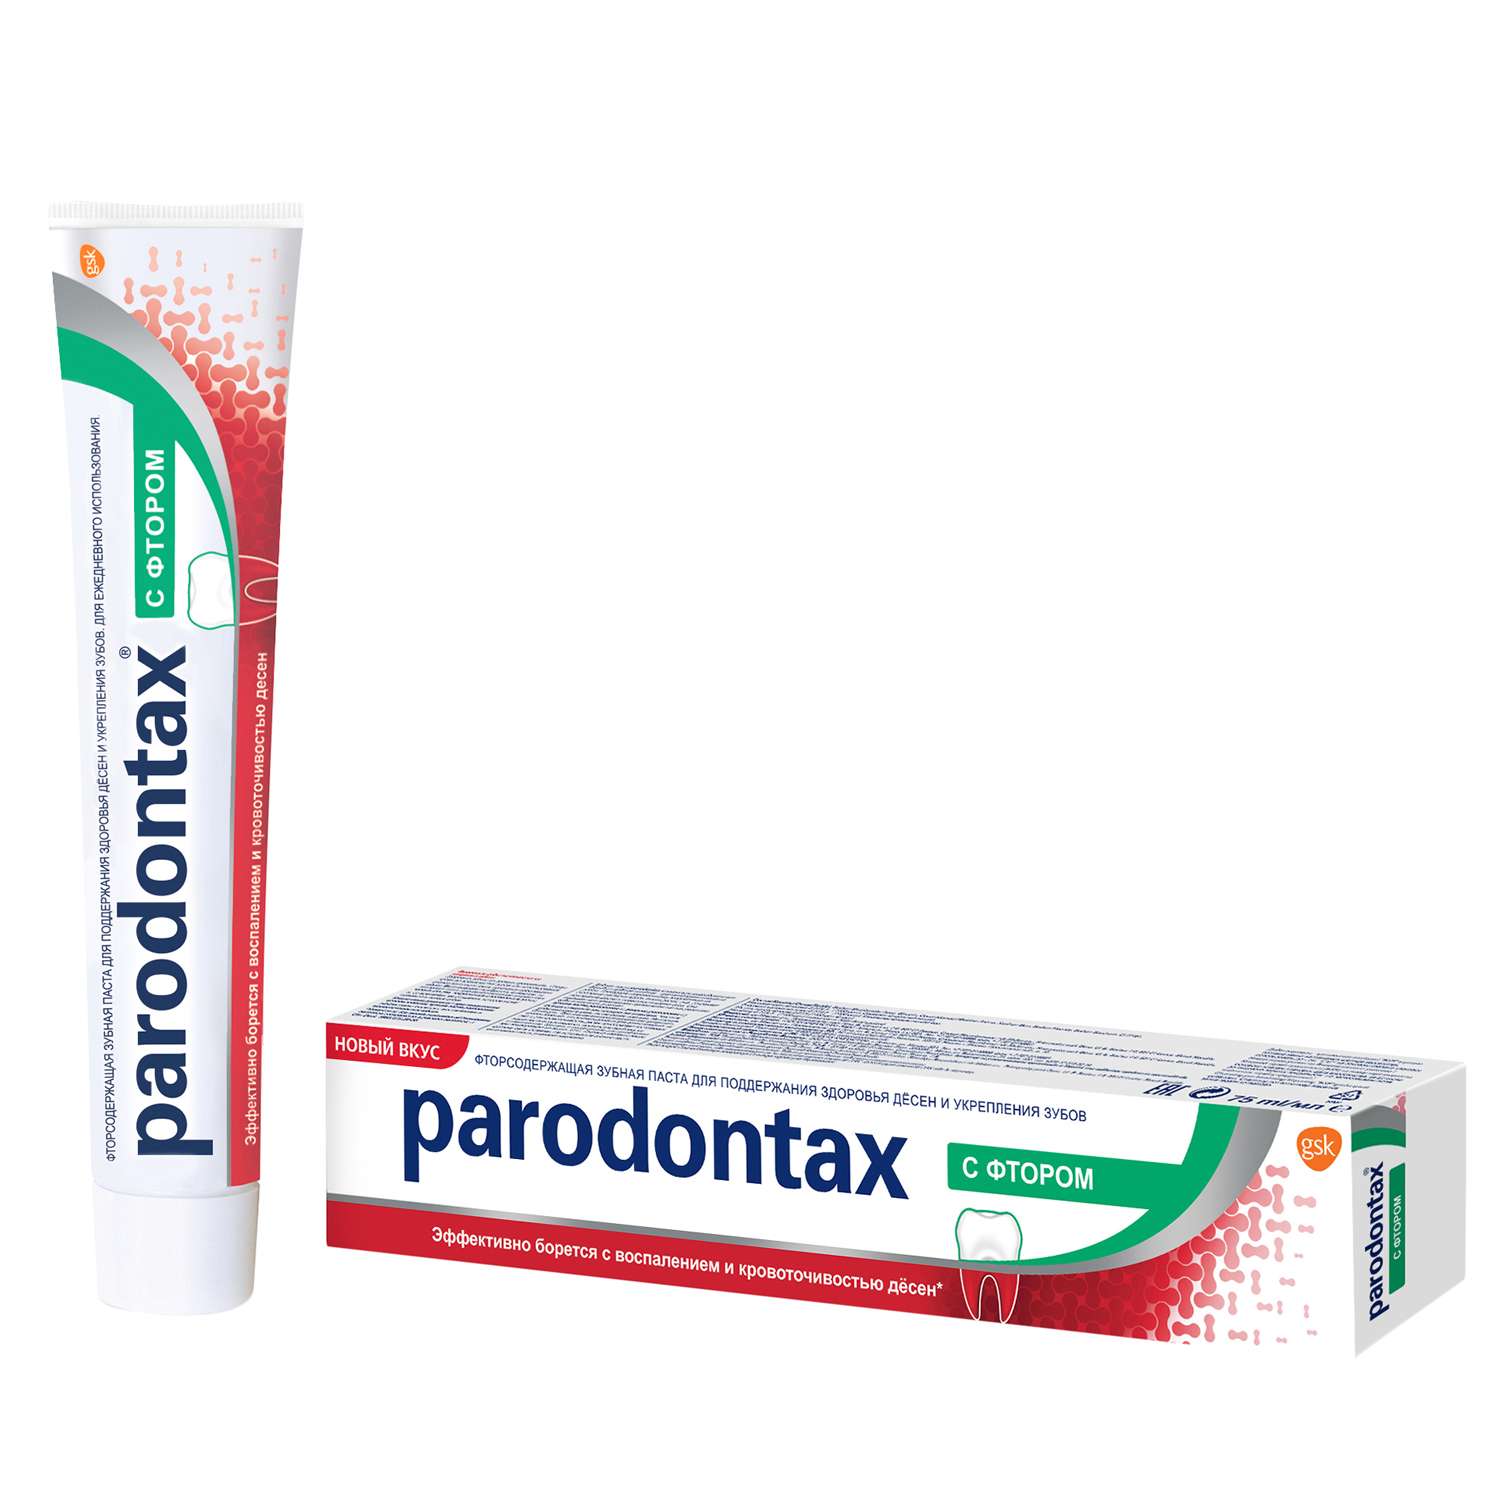 "Parodontax, зубная паста, \"с фтором\", 75 мл. Parodontax с фтором. Зубная паста Пародонтакс без фтора. Паста с фтором. Парадонтакс с фтором